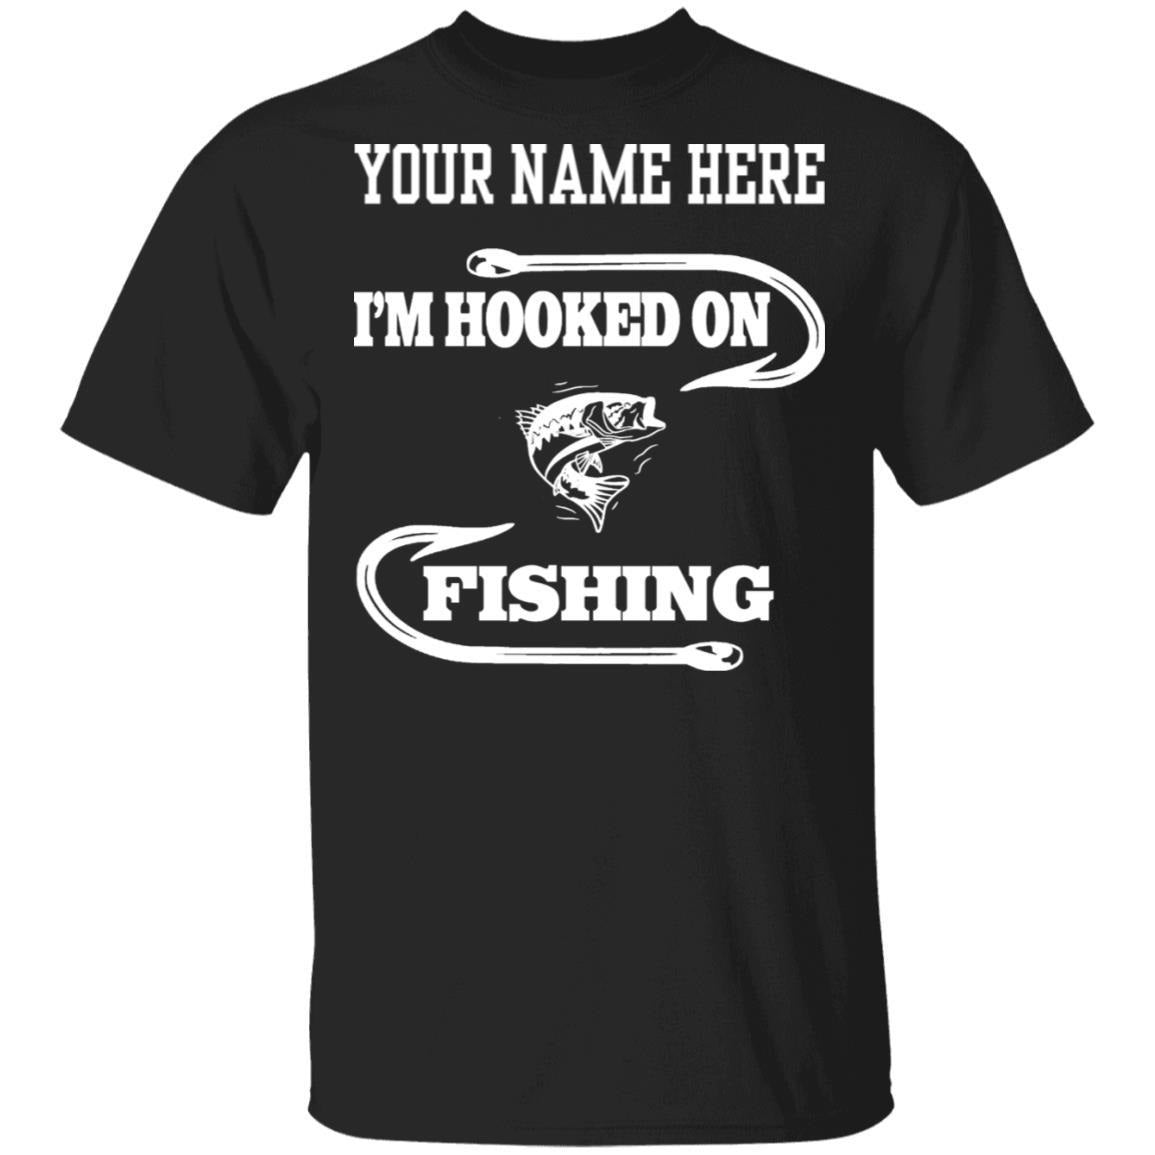 I'm hooked on fishing t-shirt w black